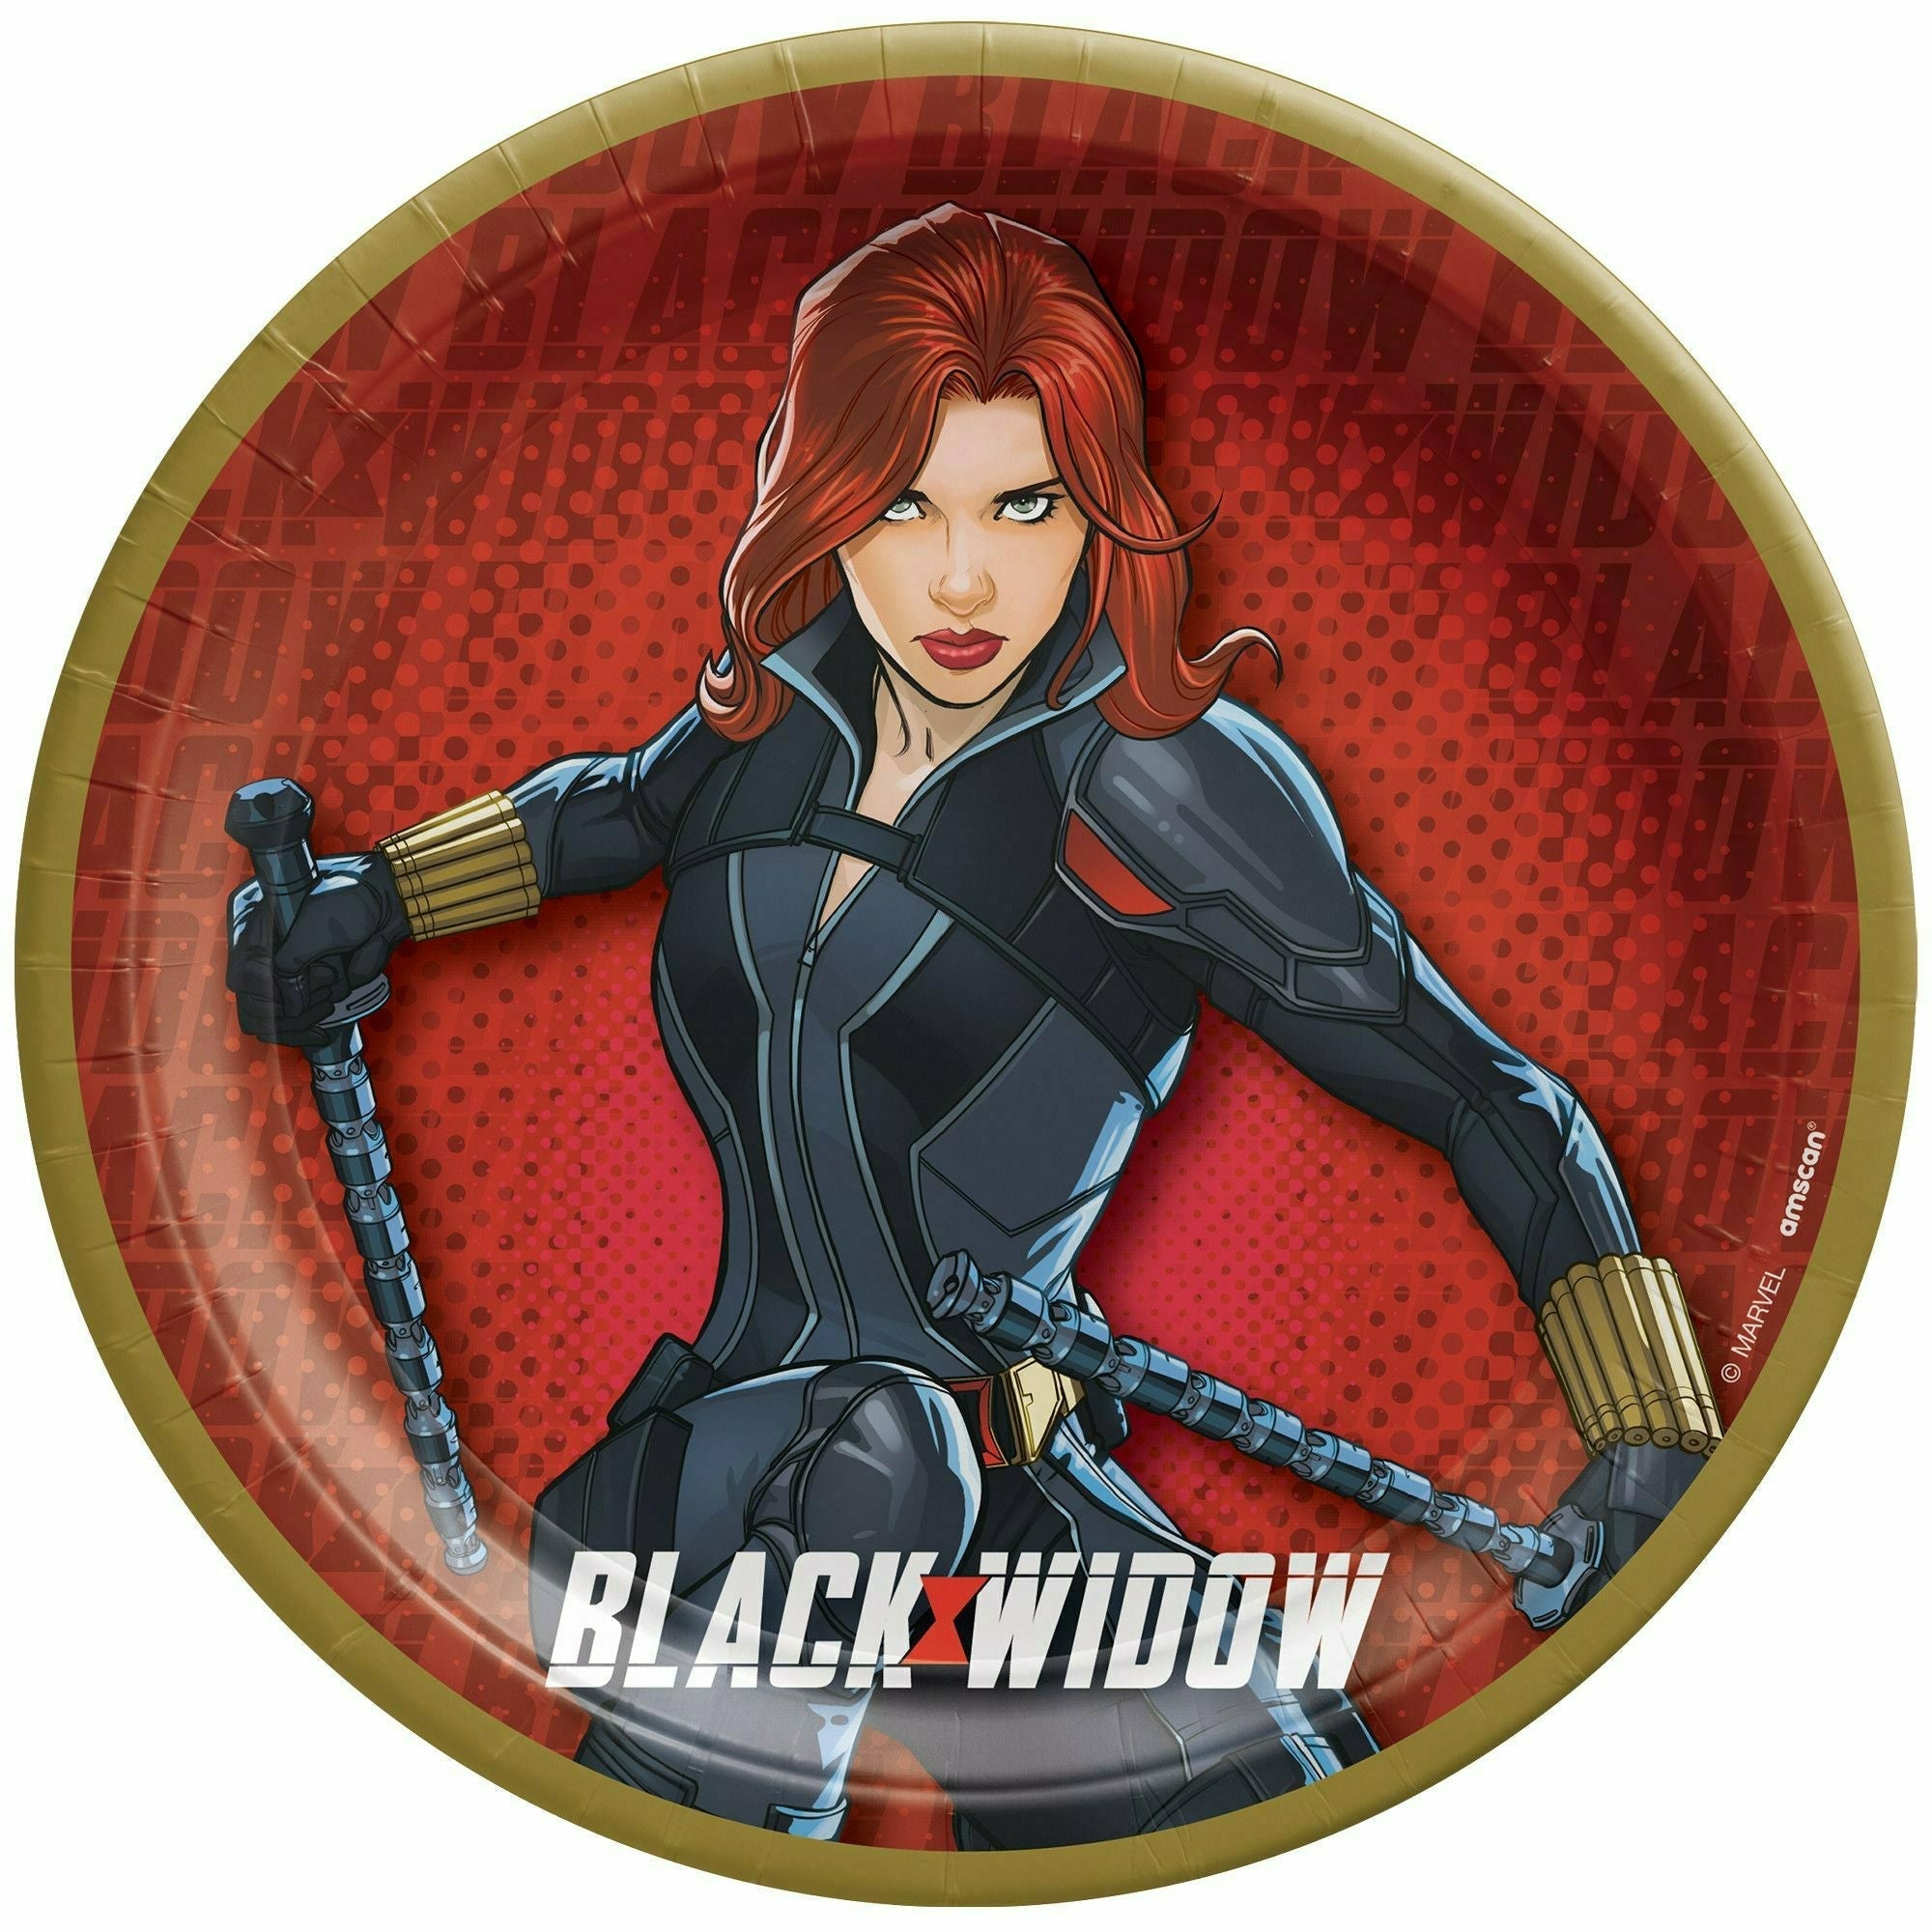 Amscan BIRTHDAY: JUVENILE Black Widow 7" Round Plates